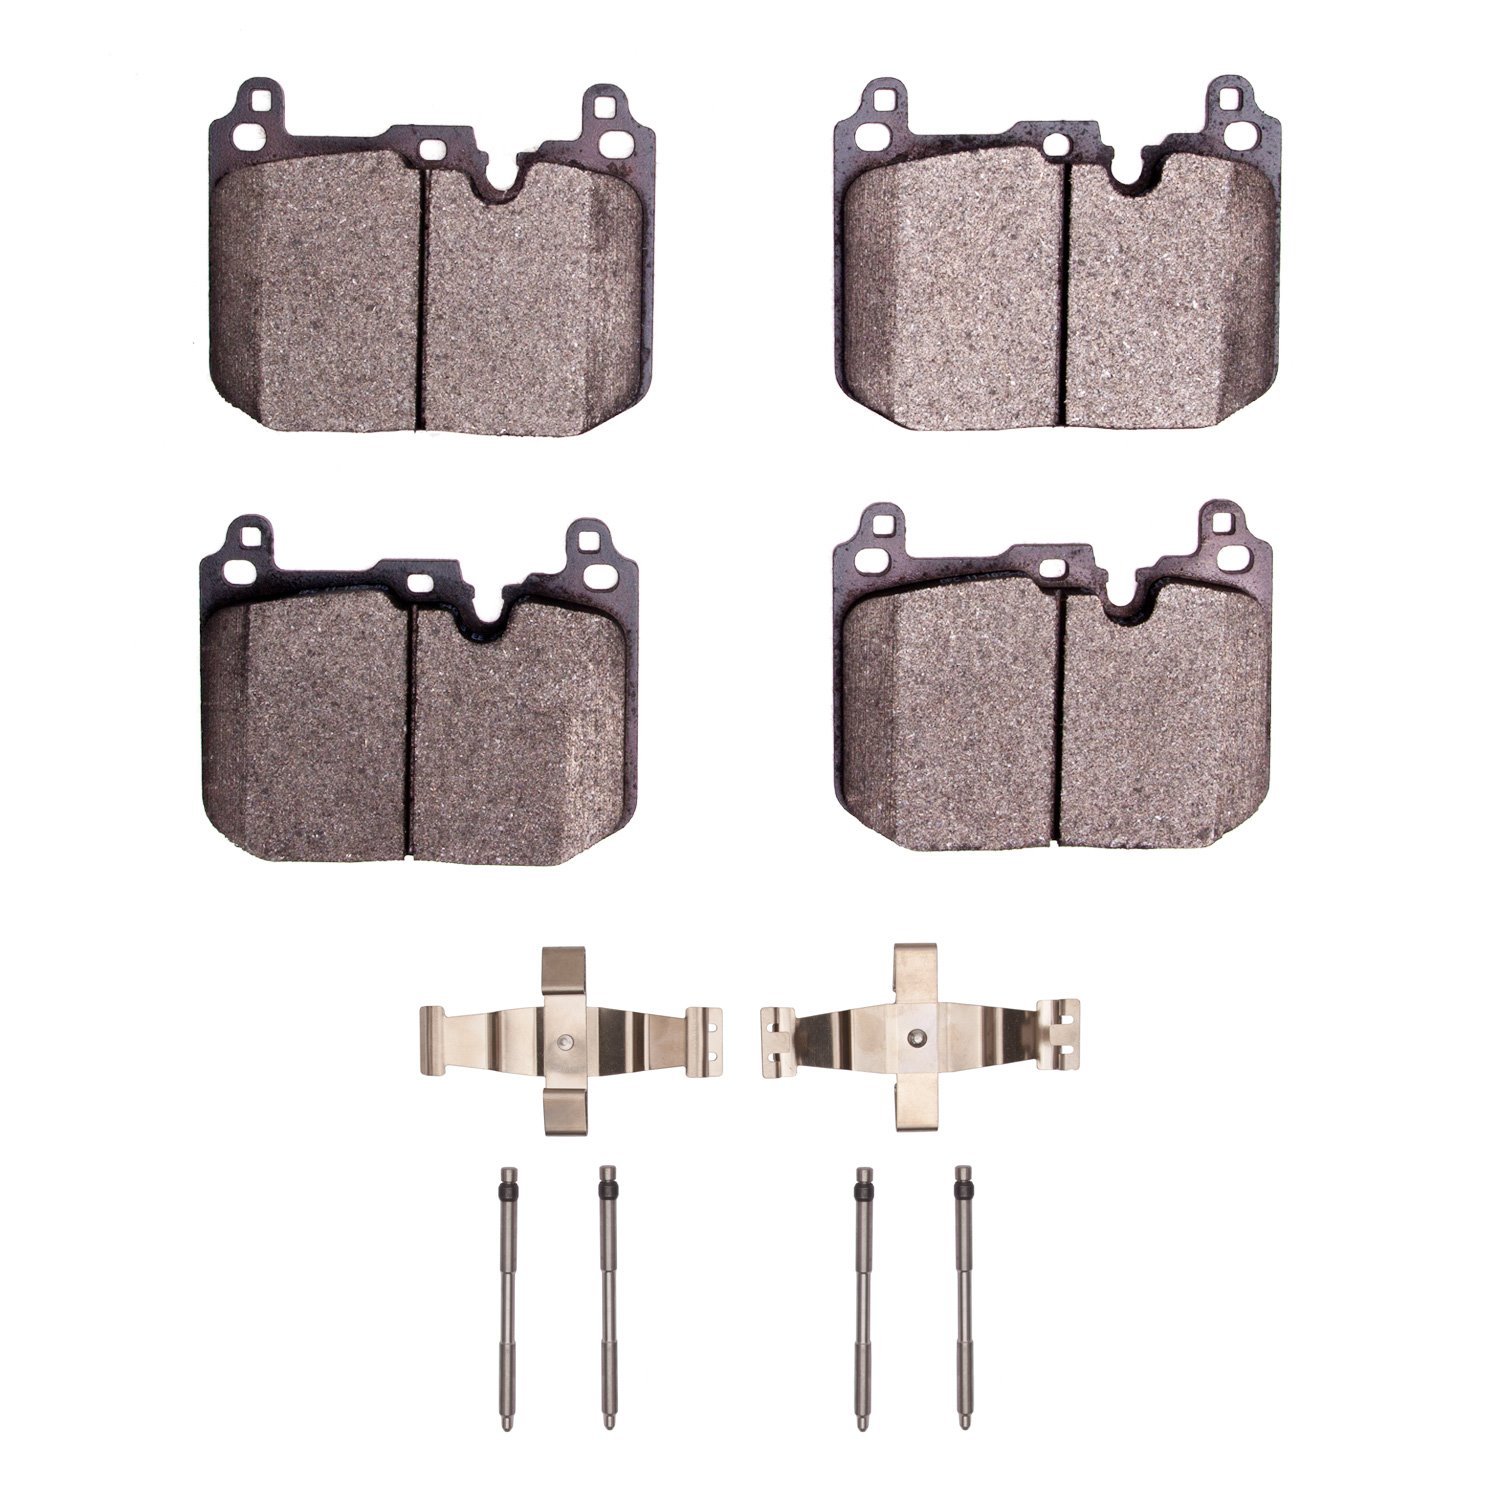 1600-1875-01 5000 Euro Ceramic Brake Pads & Hardware Kit, 2015-2019 Mini, Position: Front